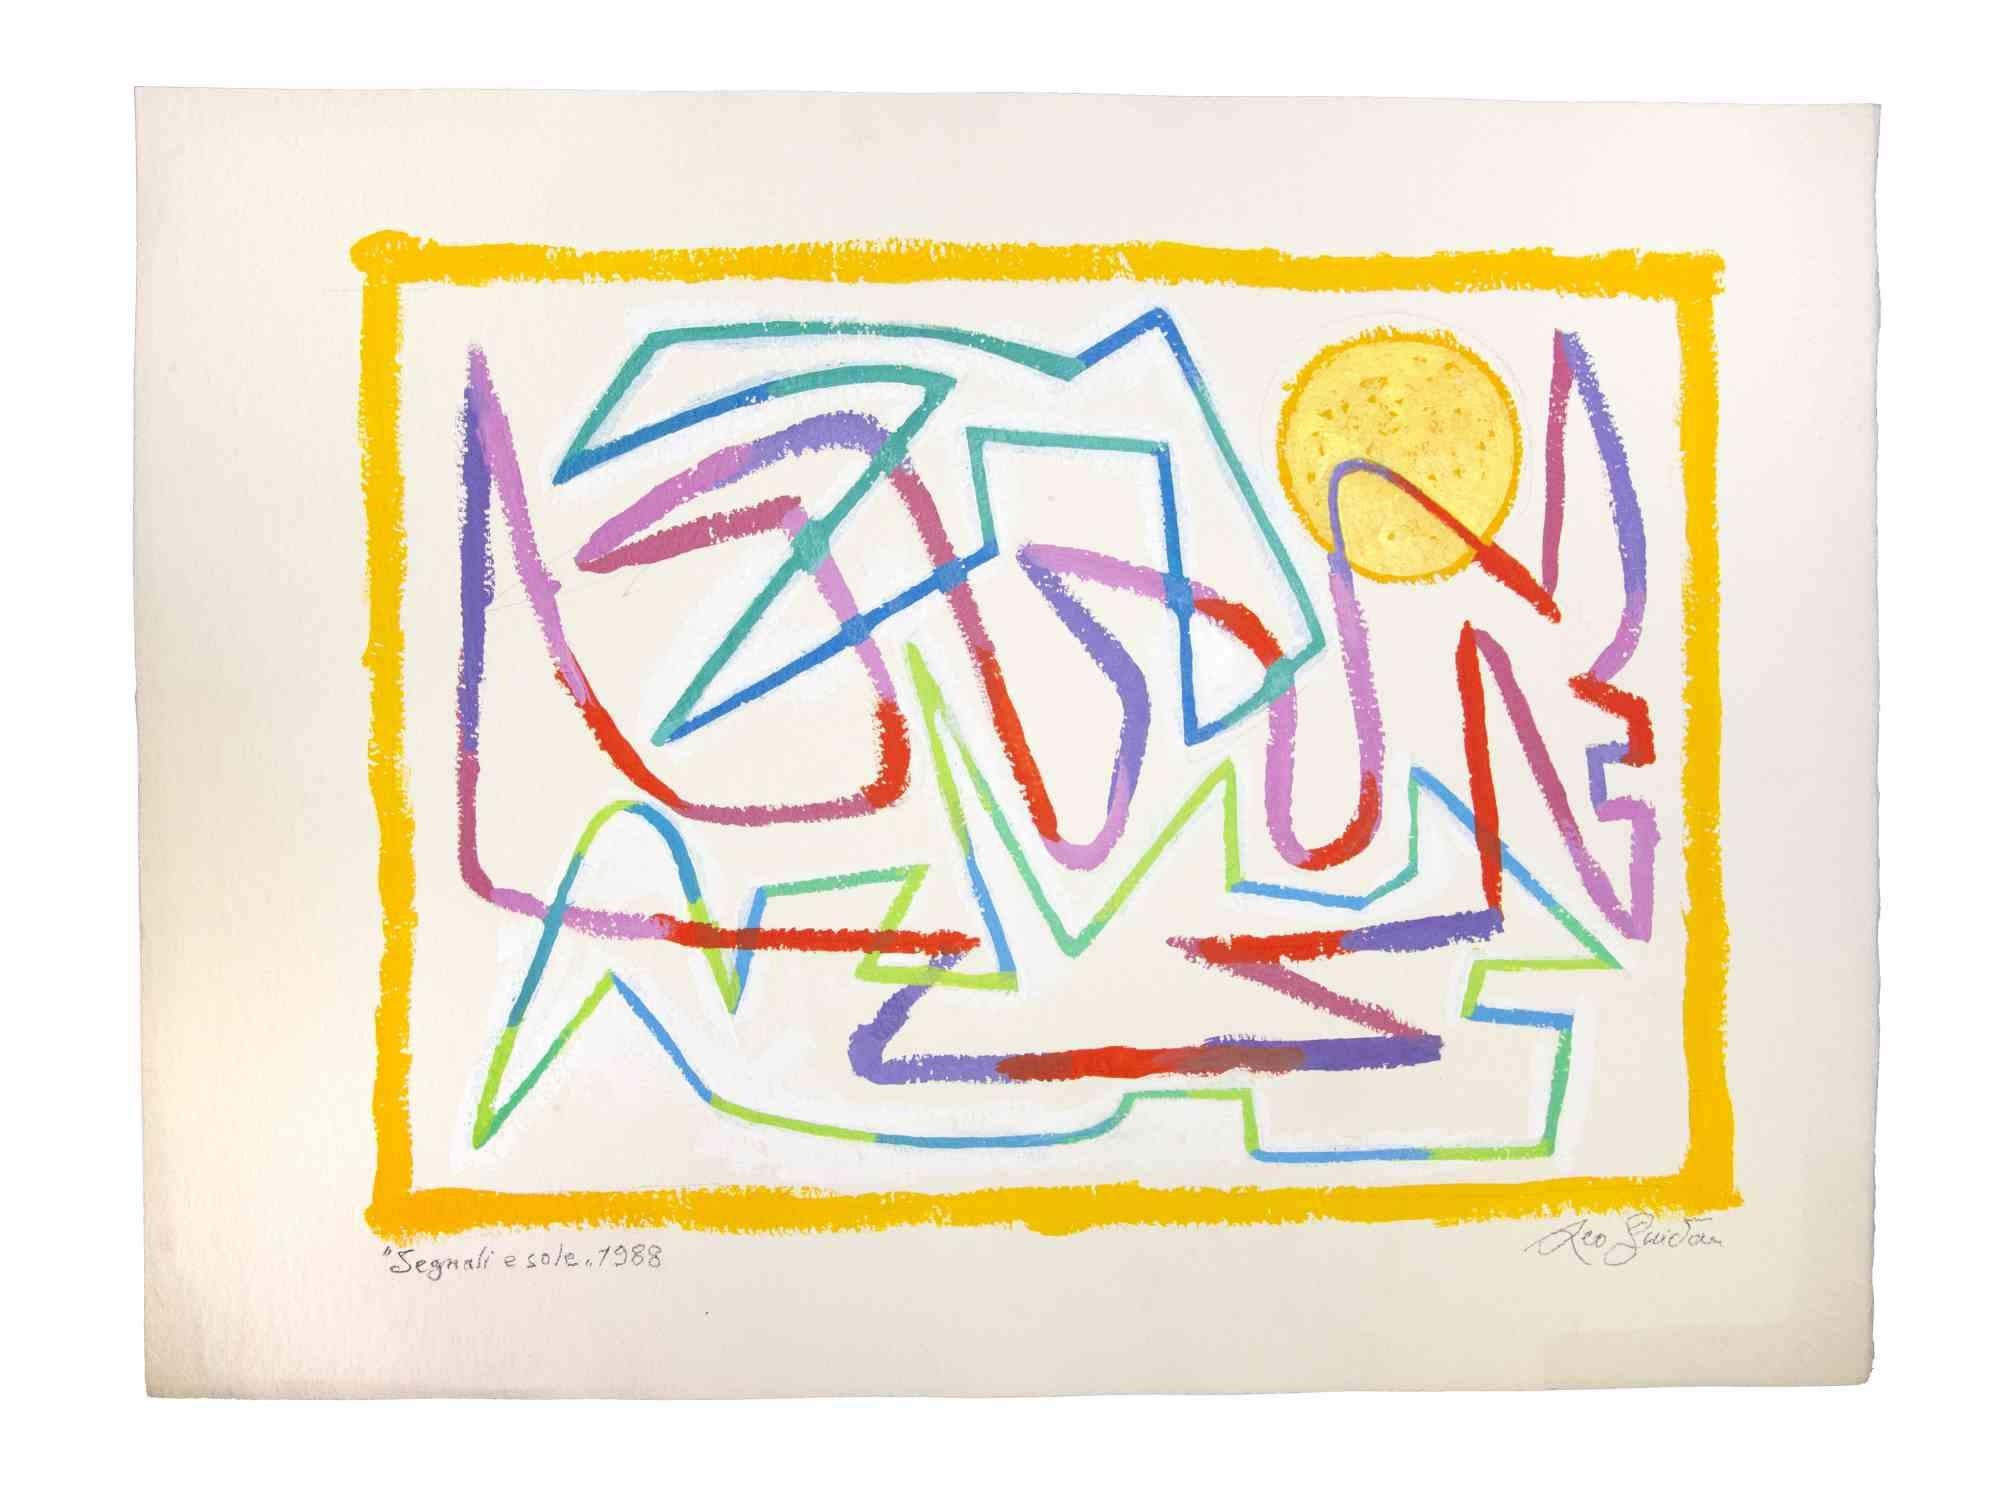 Segnali e Sole – Zeichnung von Leo Guida – 1988